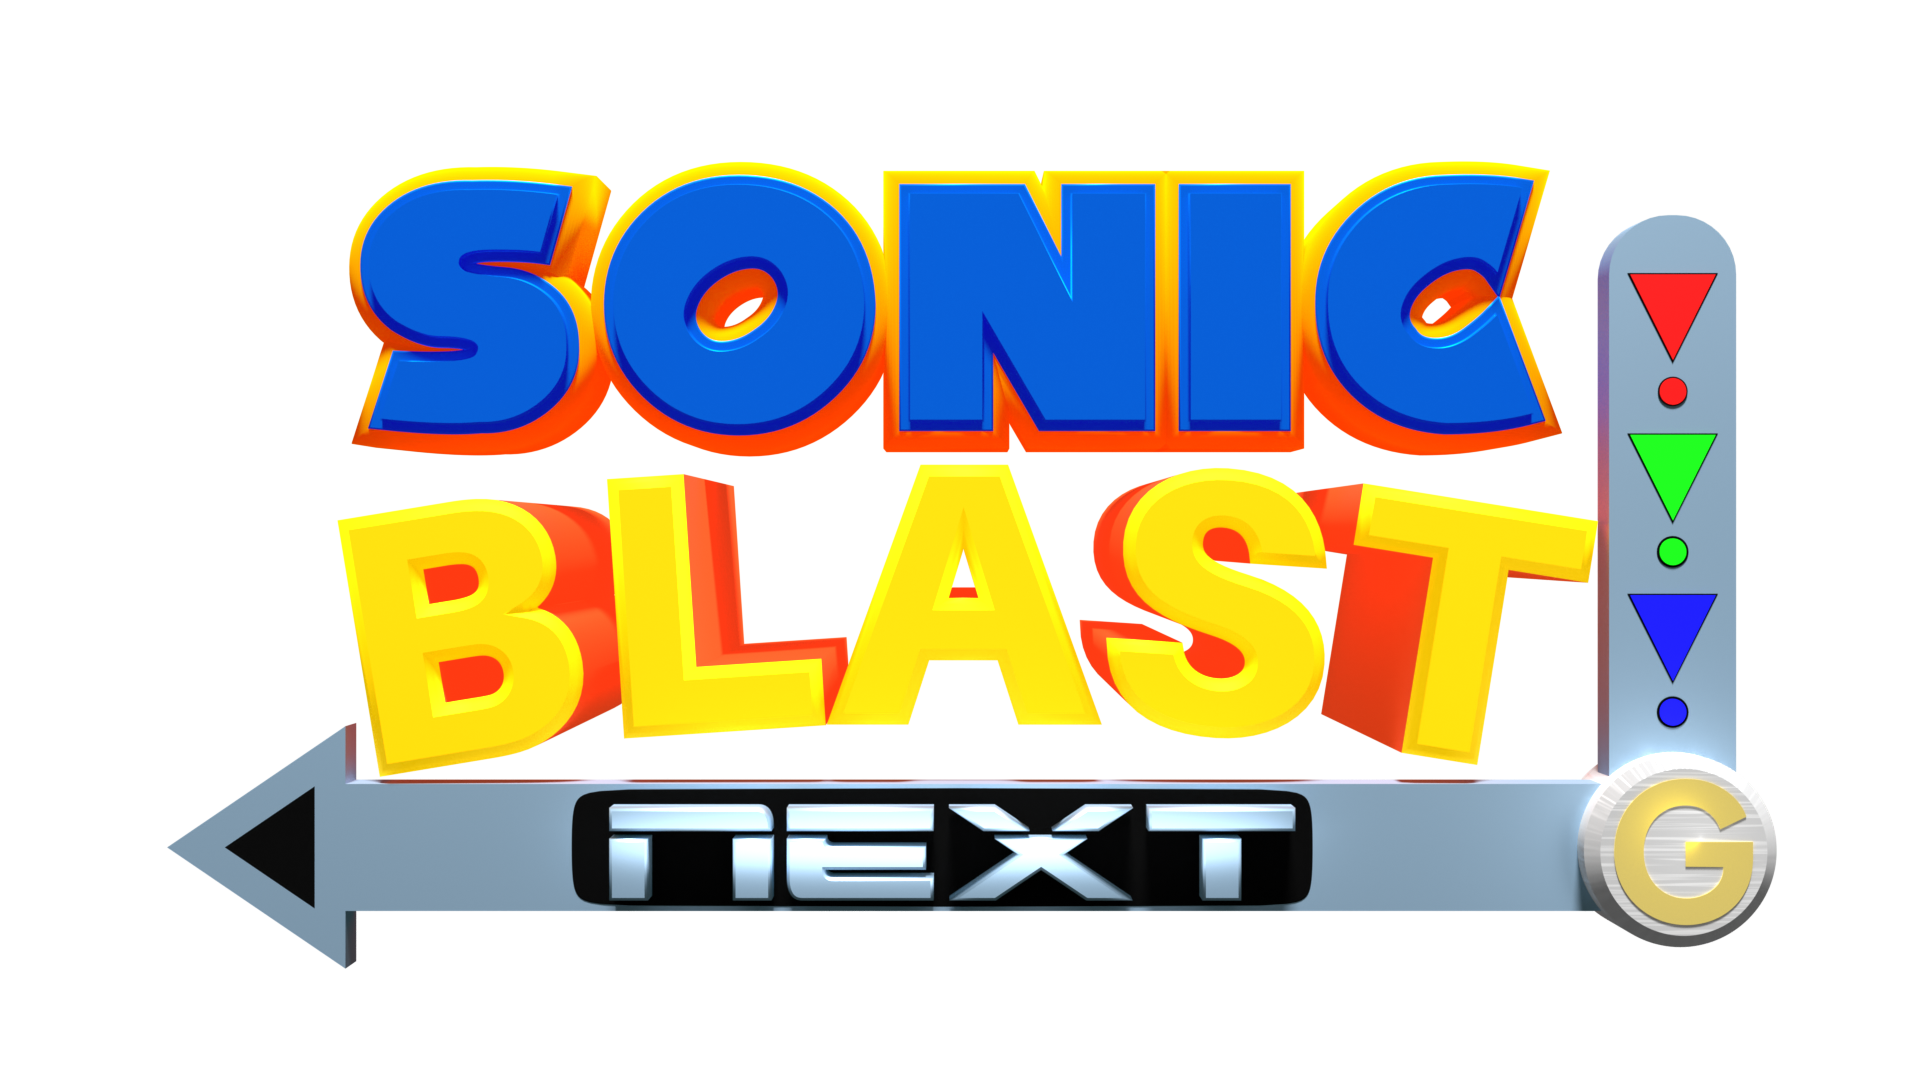 SAGE 2022 - Complete - Sonic 1 Pre-render Blast